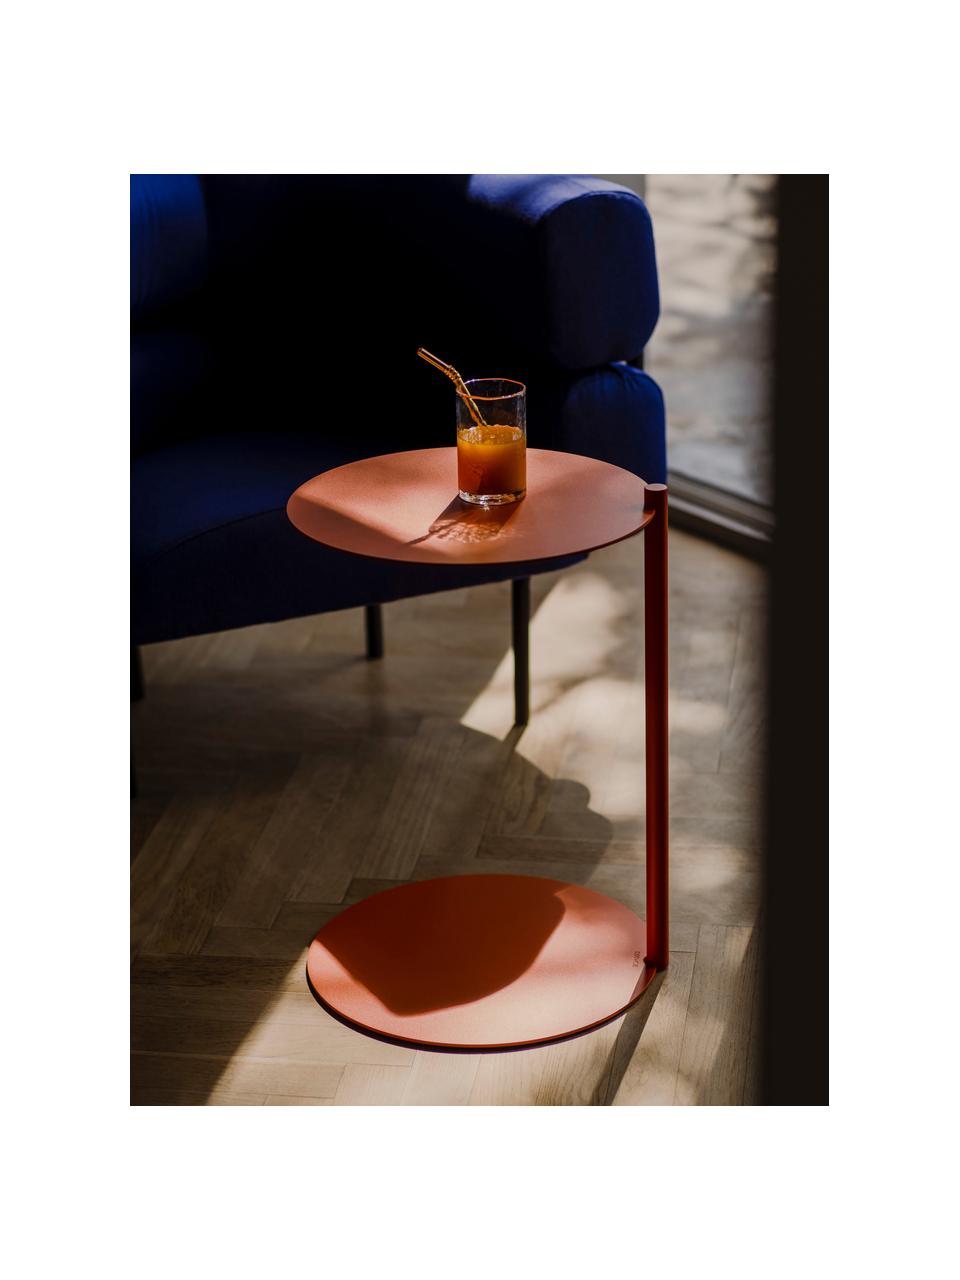 Okrúhly odkladací stolík Ande, Oceľ s práškovým náterom, Oranžová, Ø 40 x V 55 cm